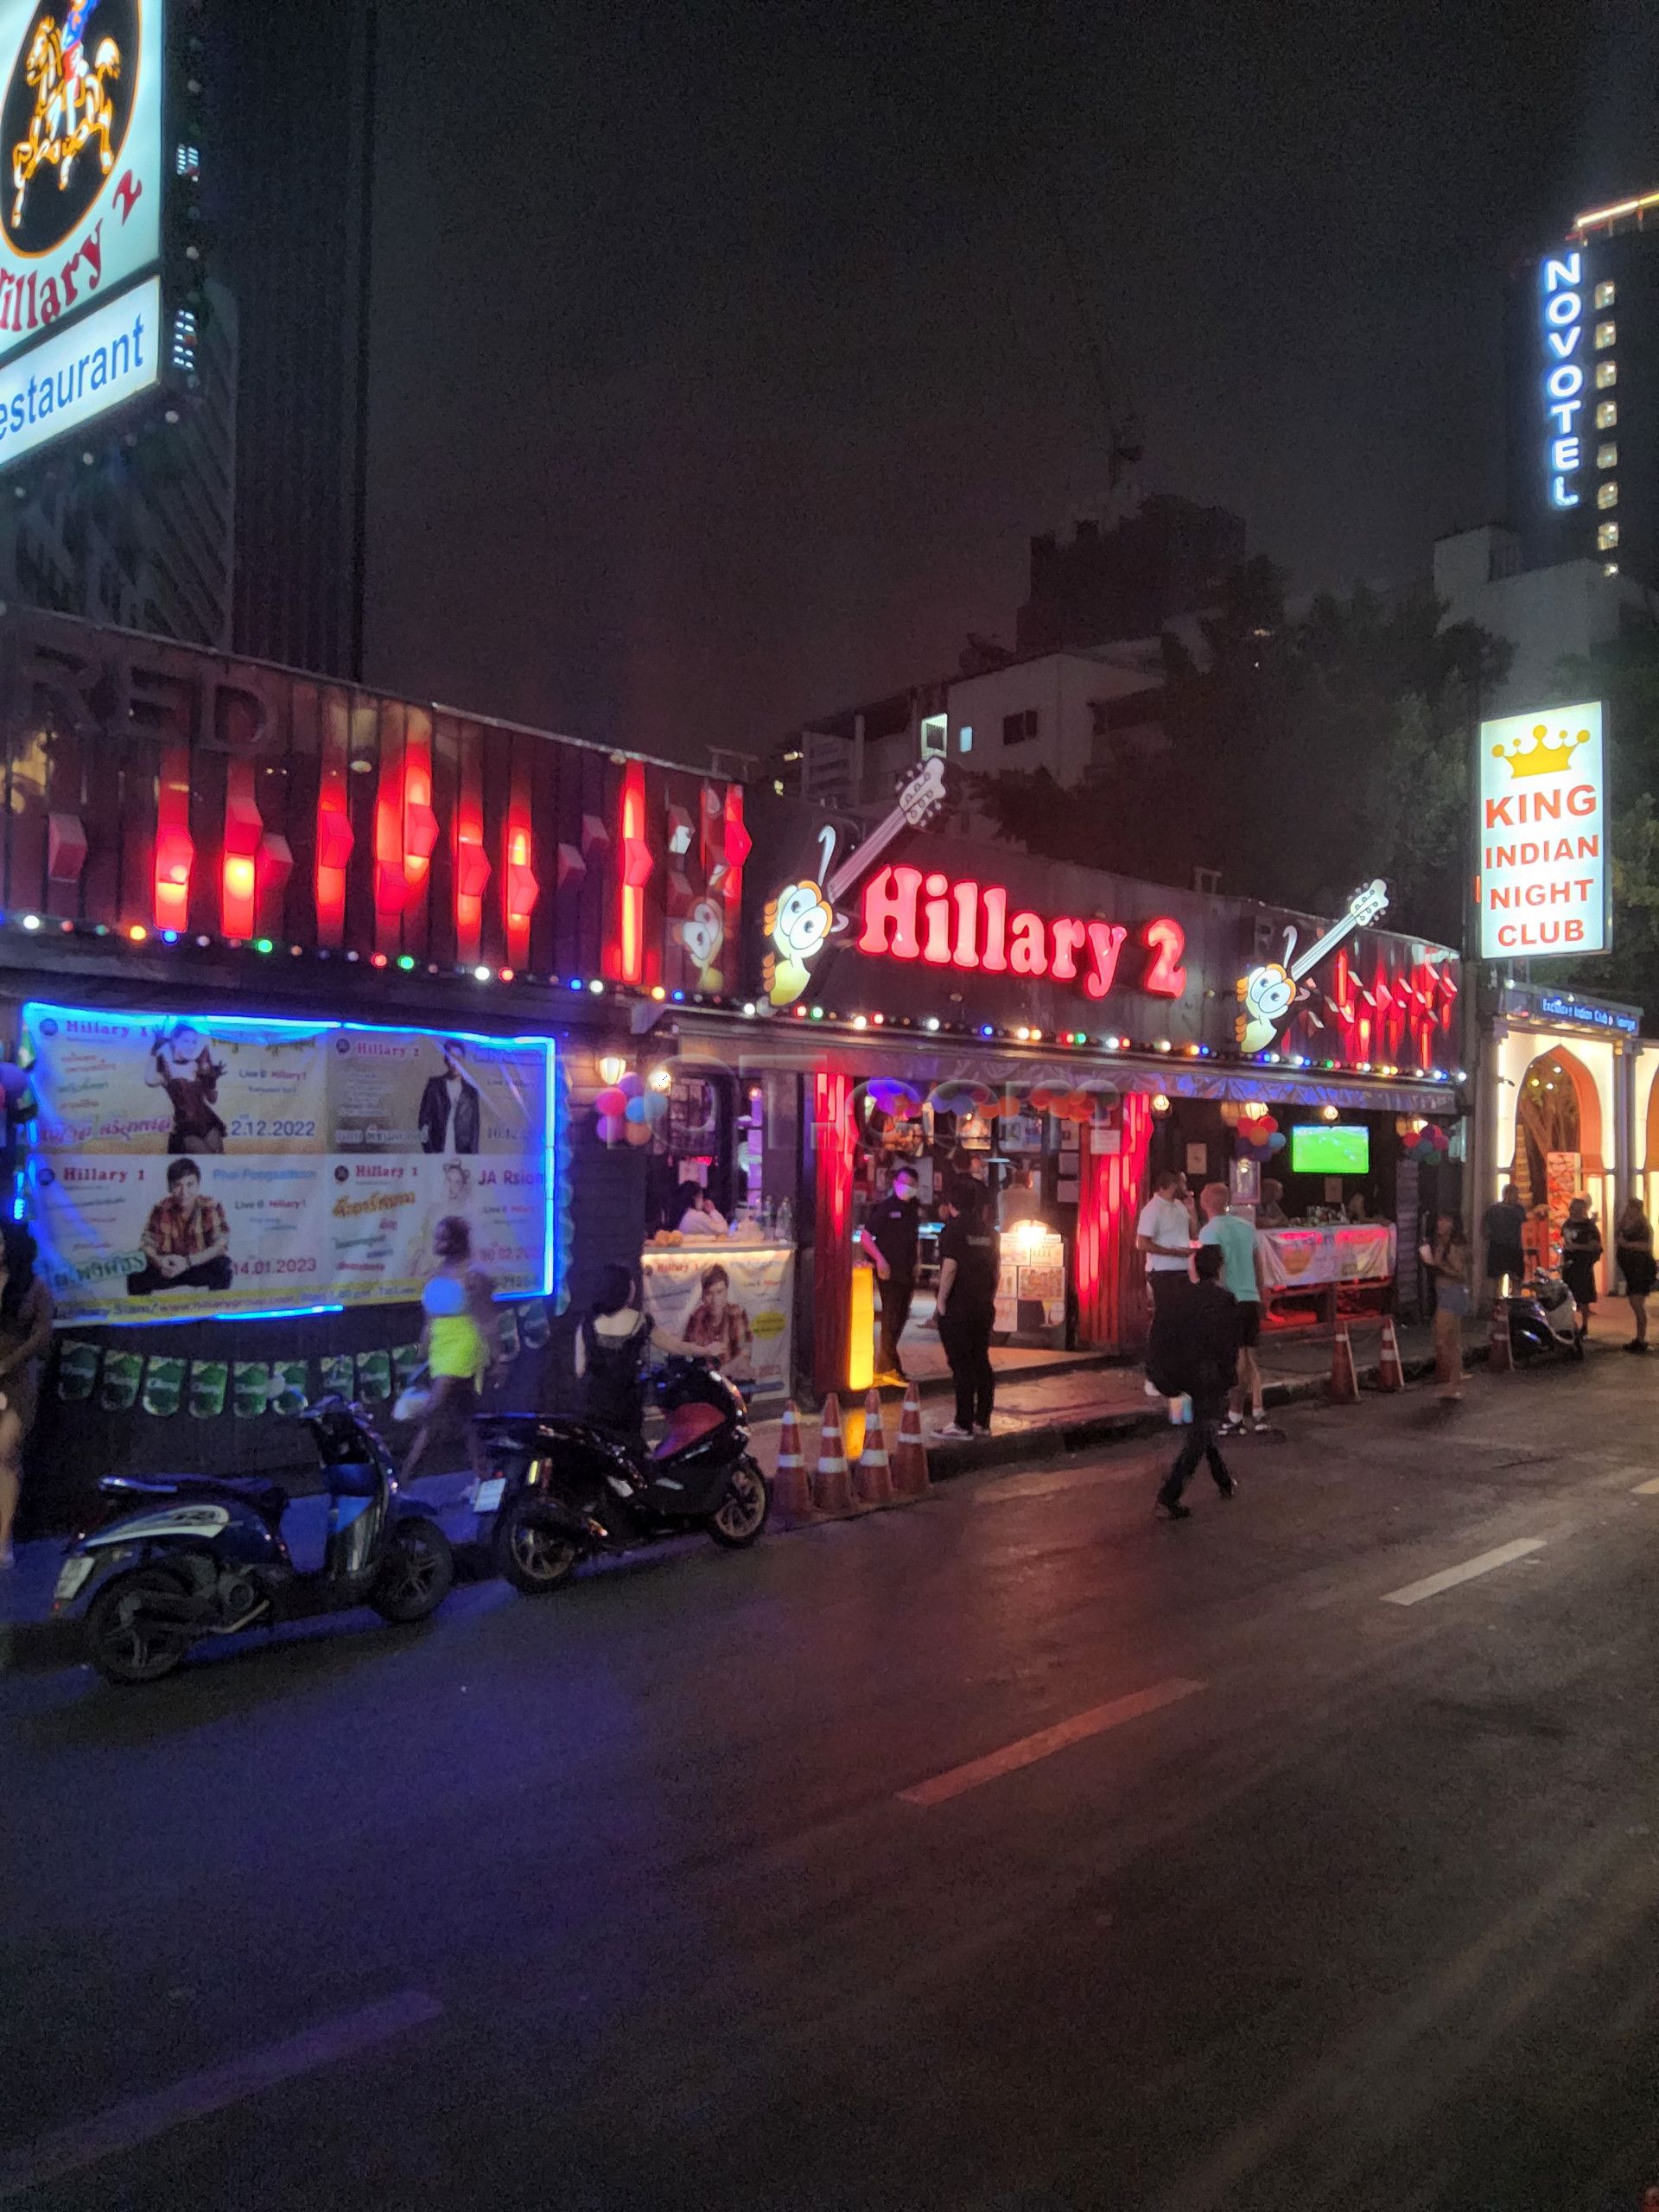 Bangkok, Thailand Hillary 2